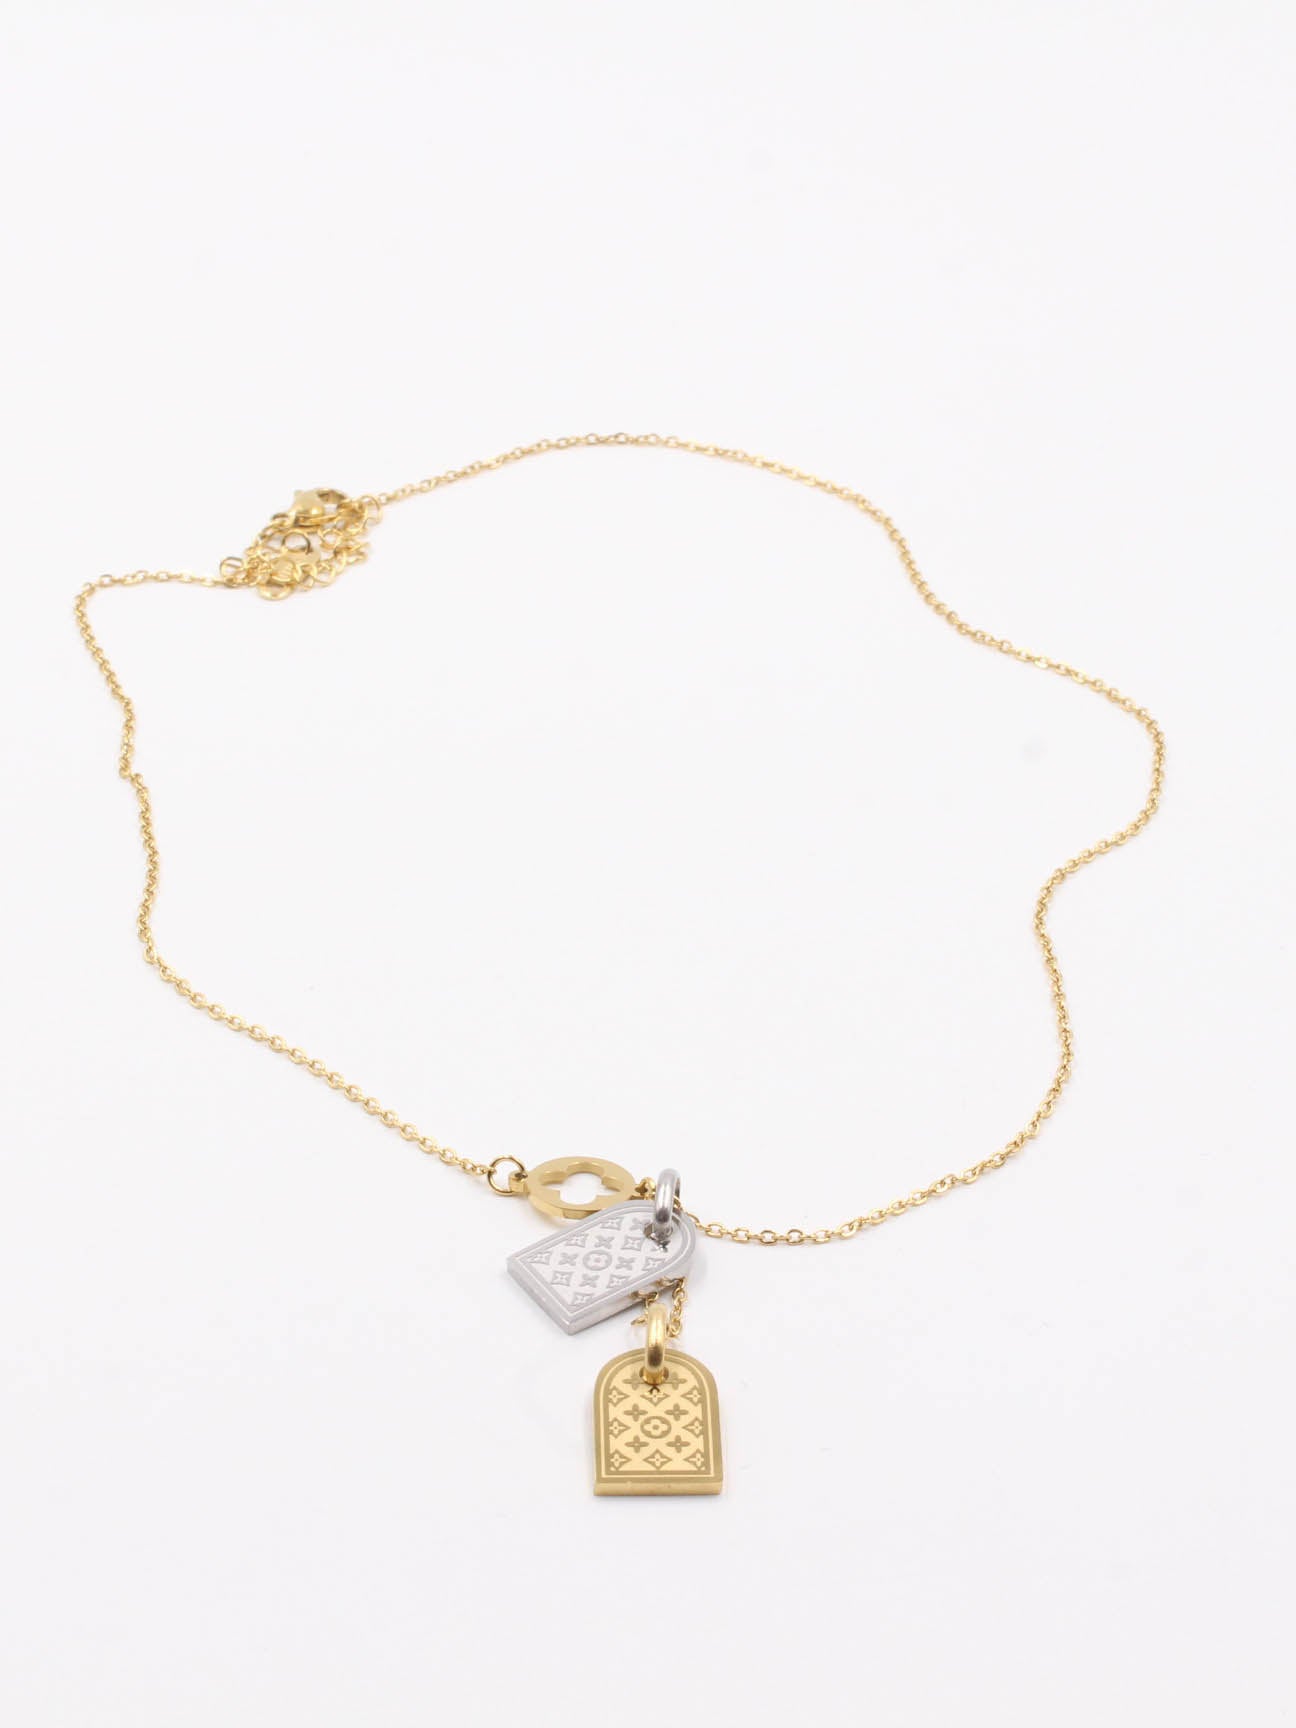 Louis Vuitton gold necklace - سلسال لويس فيتون الذهبي سلسال Jewel   